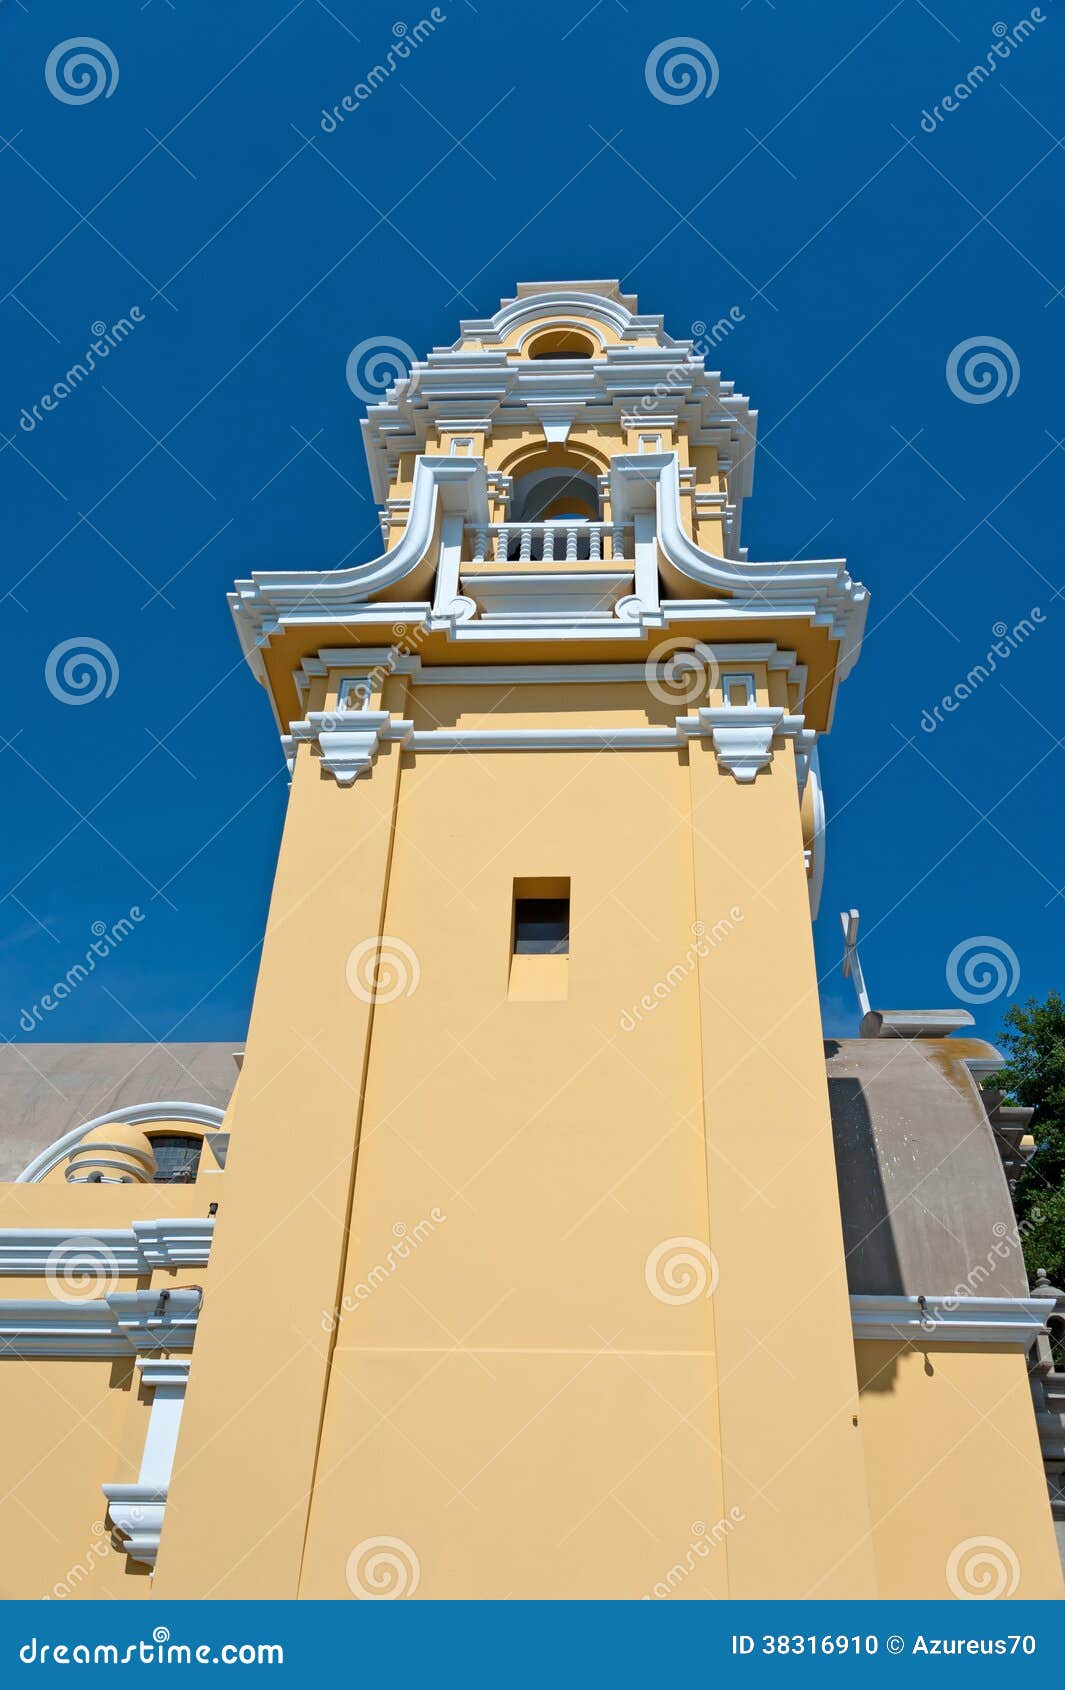 barranco church